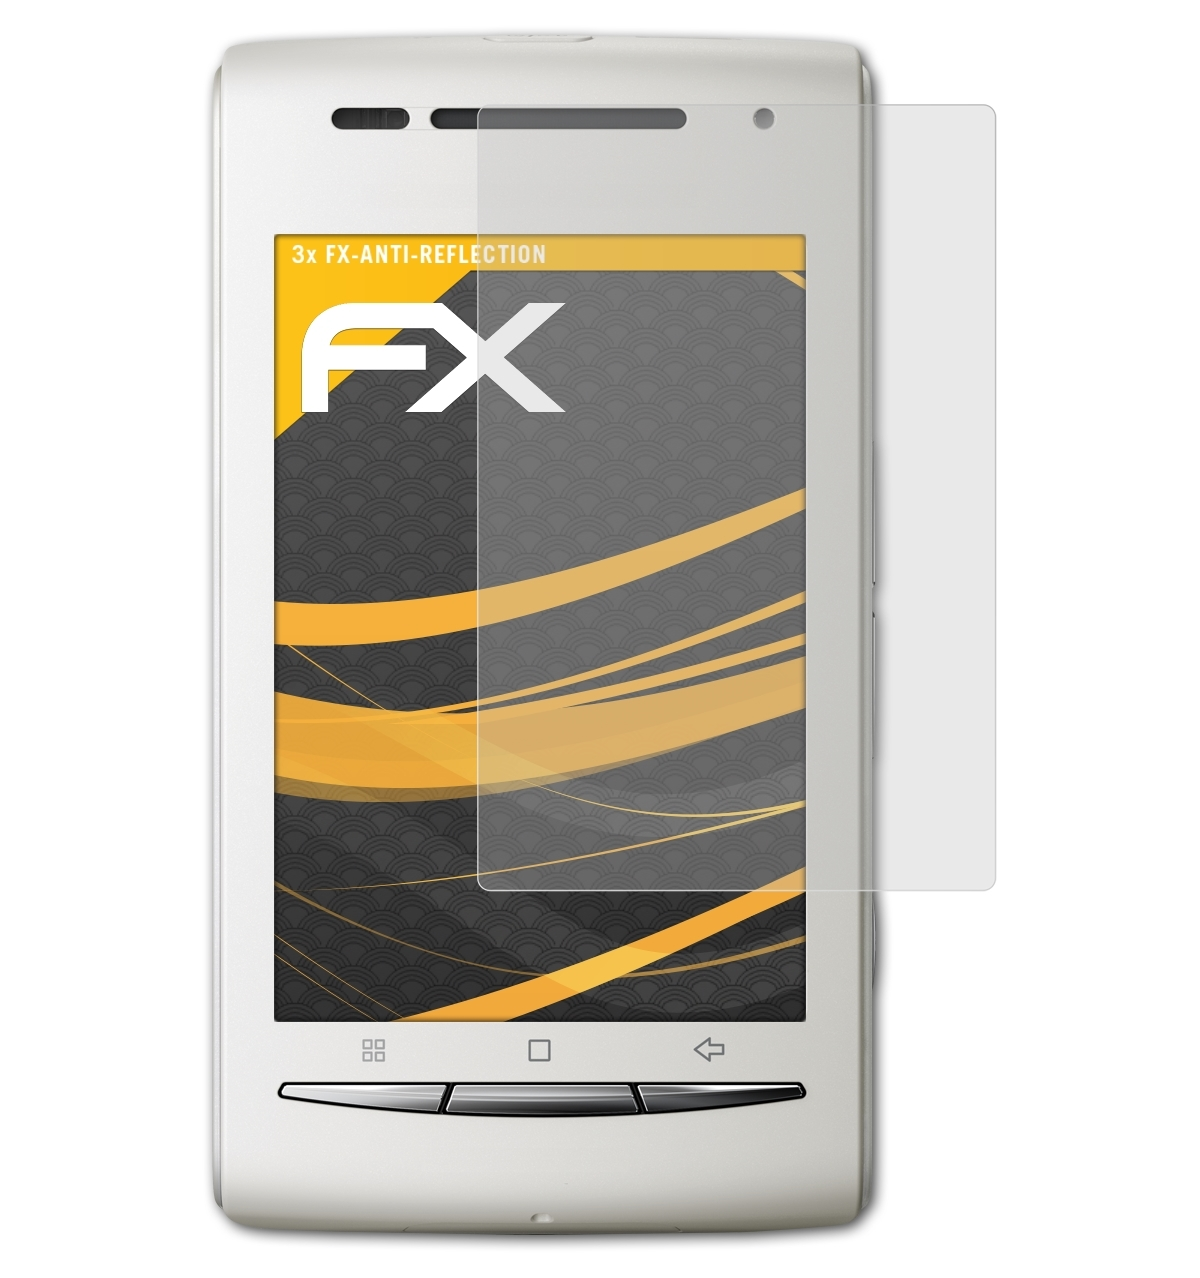 ATFOLIX 3x FX-Antireflex Displayschutz(für Sony-Ericsson Xperia X8)